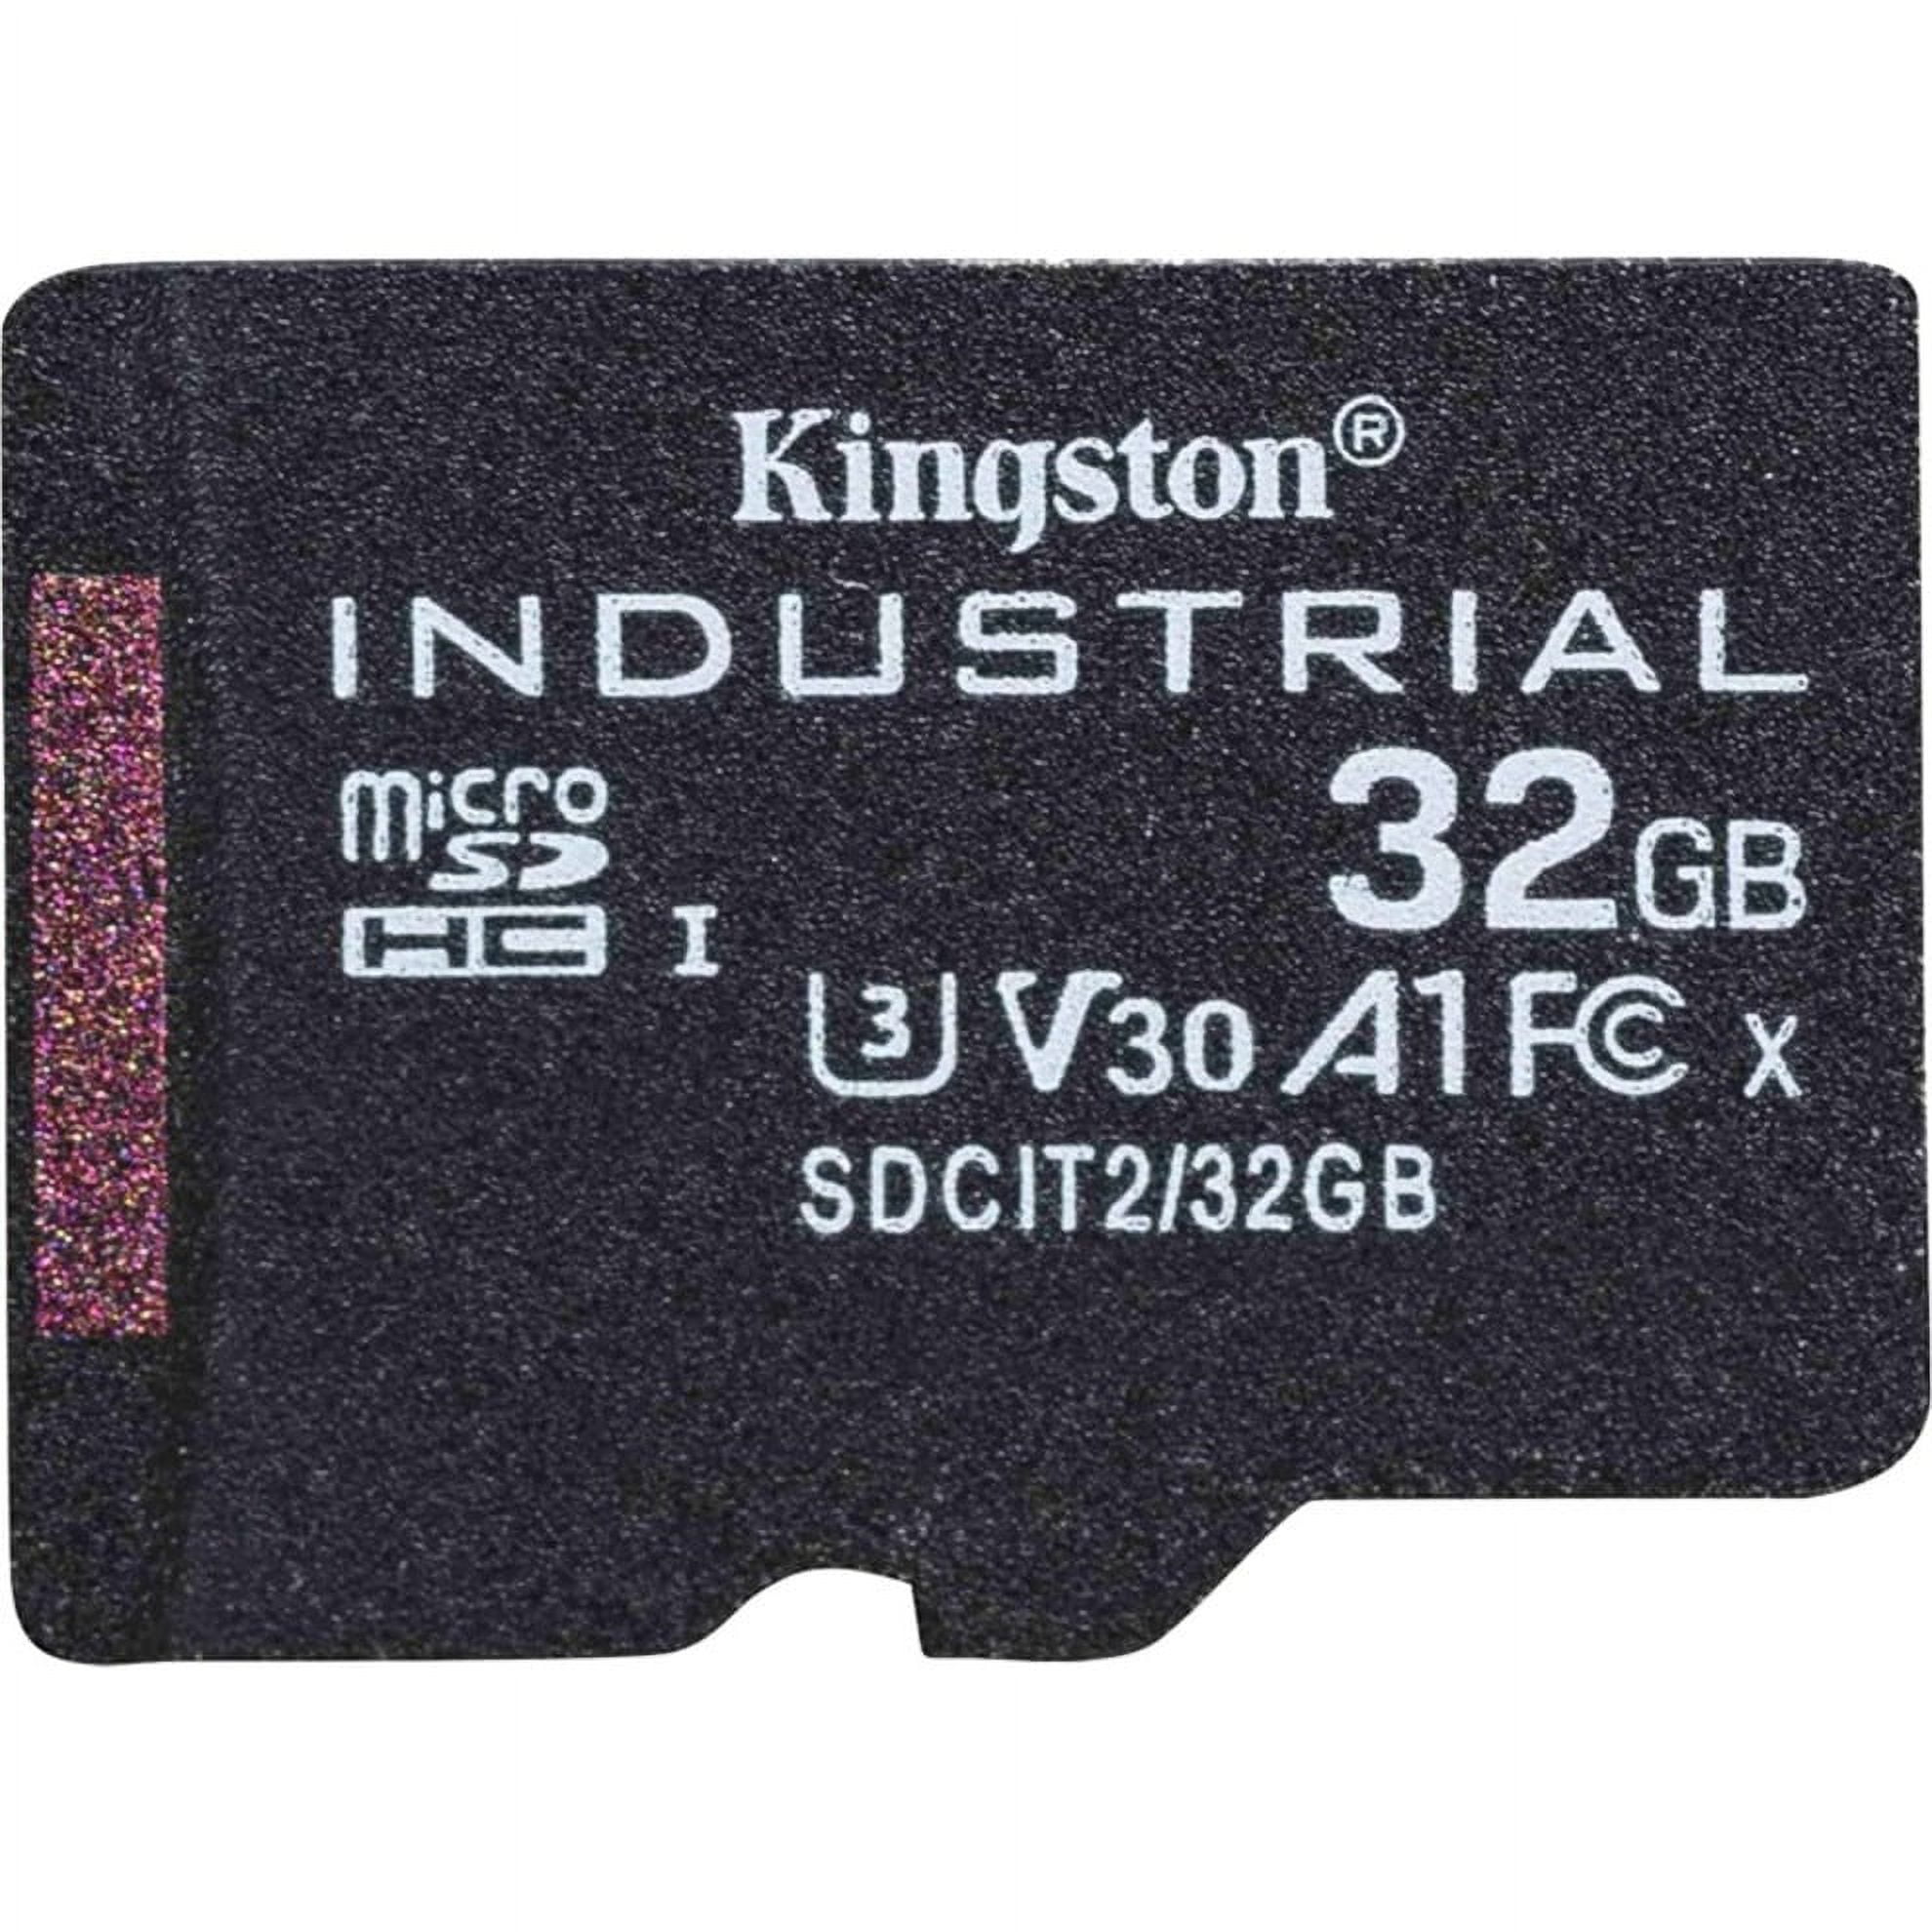 axGear Kingston carte mémoire micro SD 32 Go SDHC classe 10 UHS-I